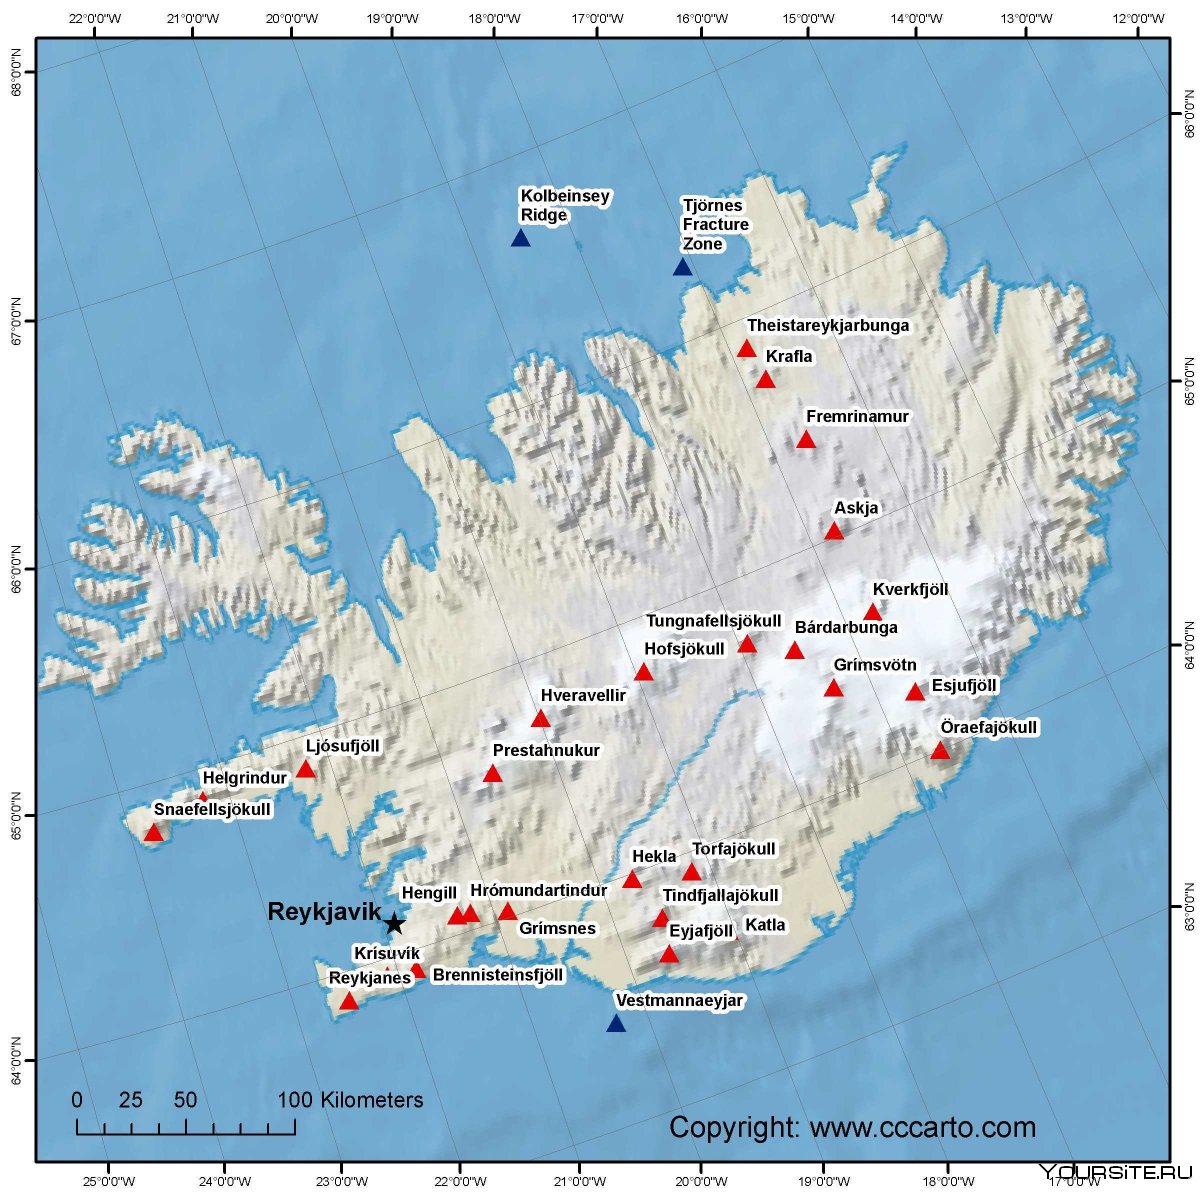 Вулкан Гекла на карте Исландии